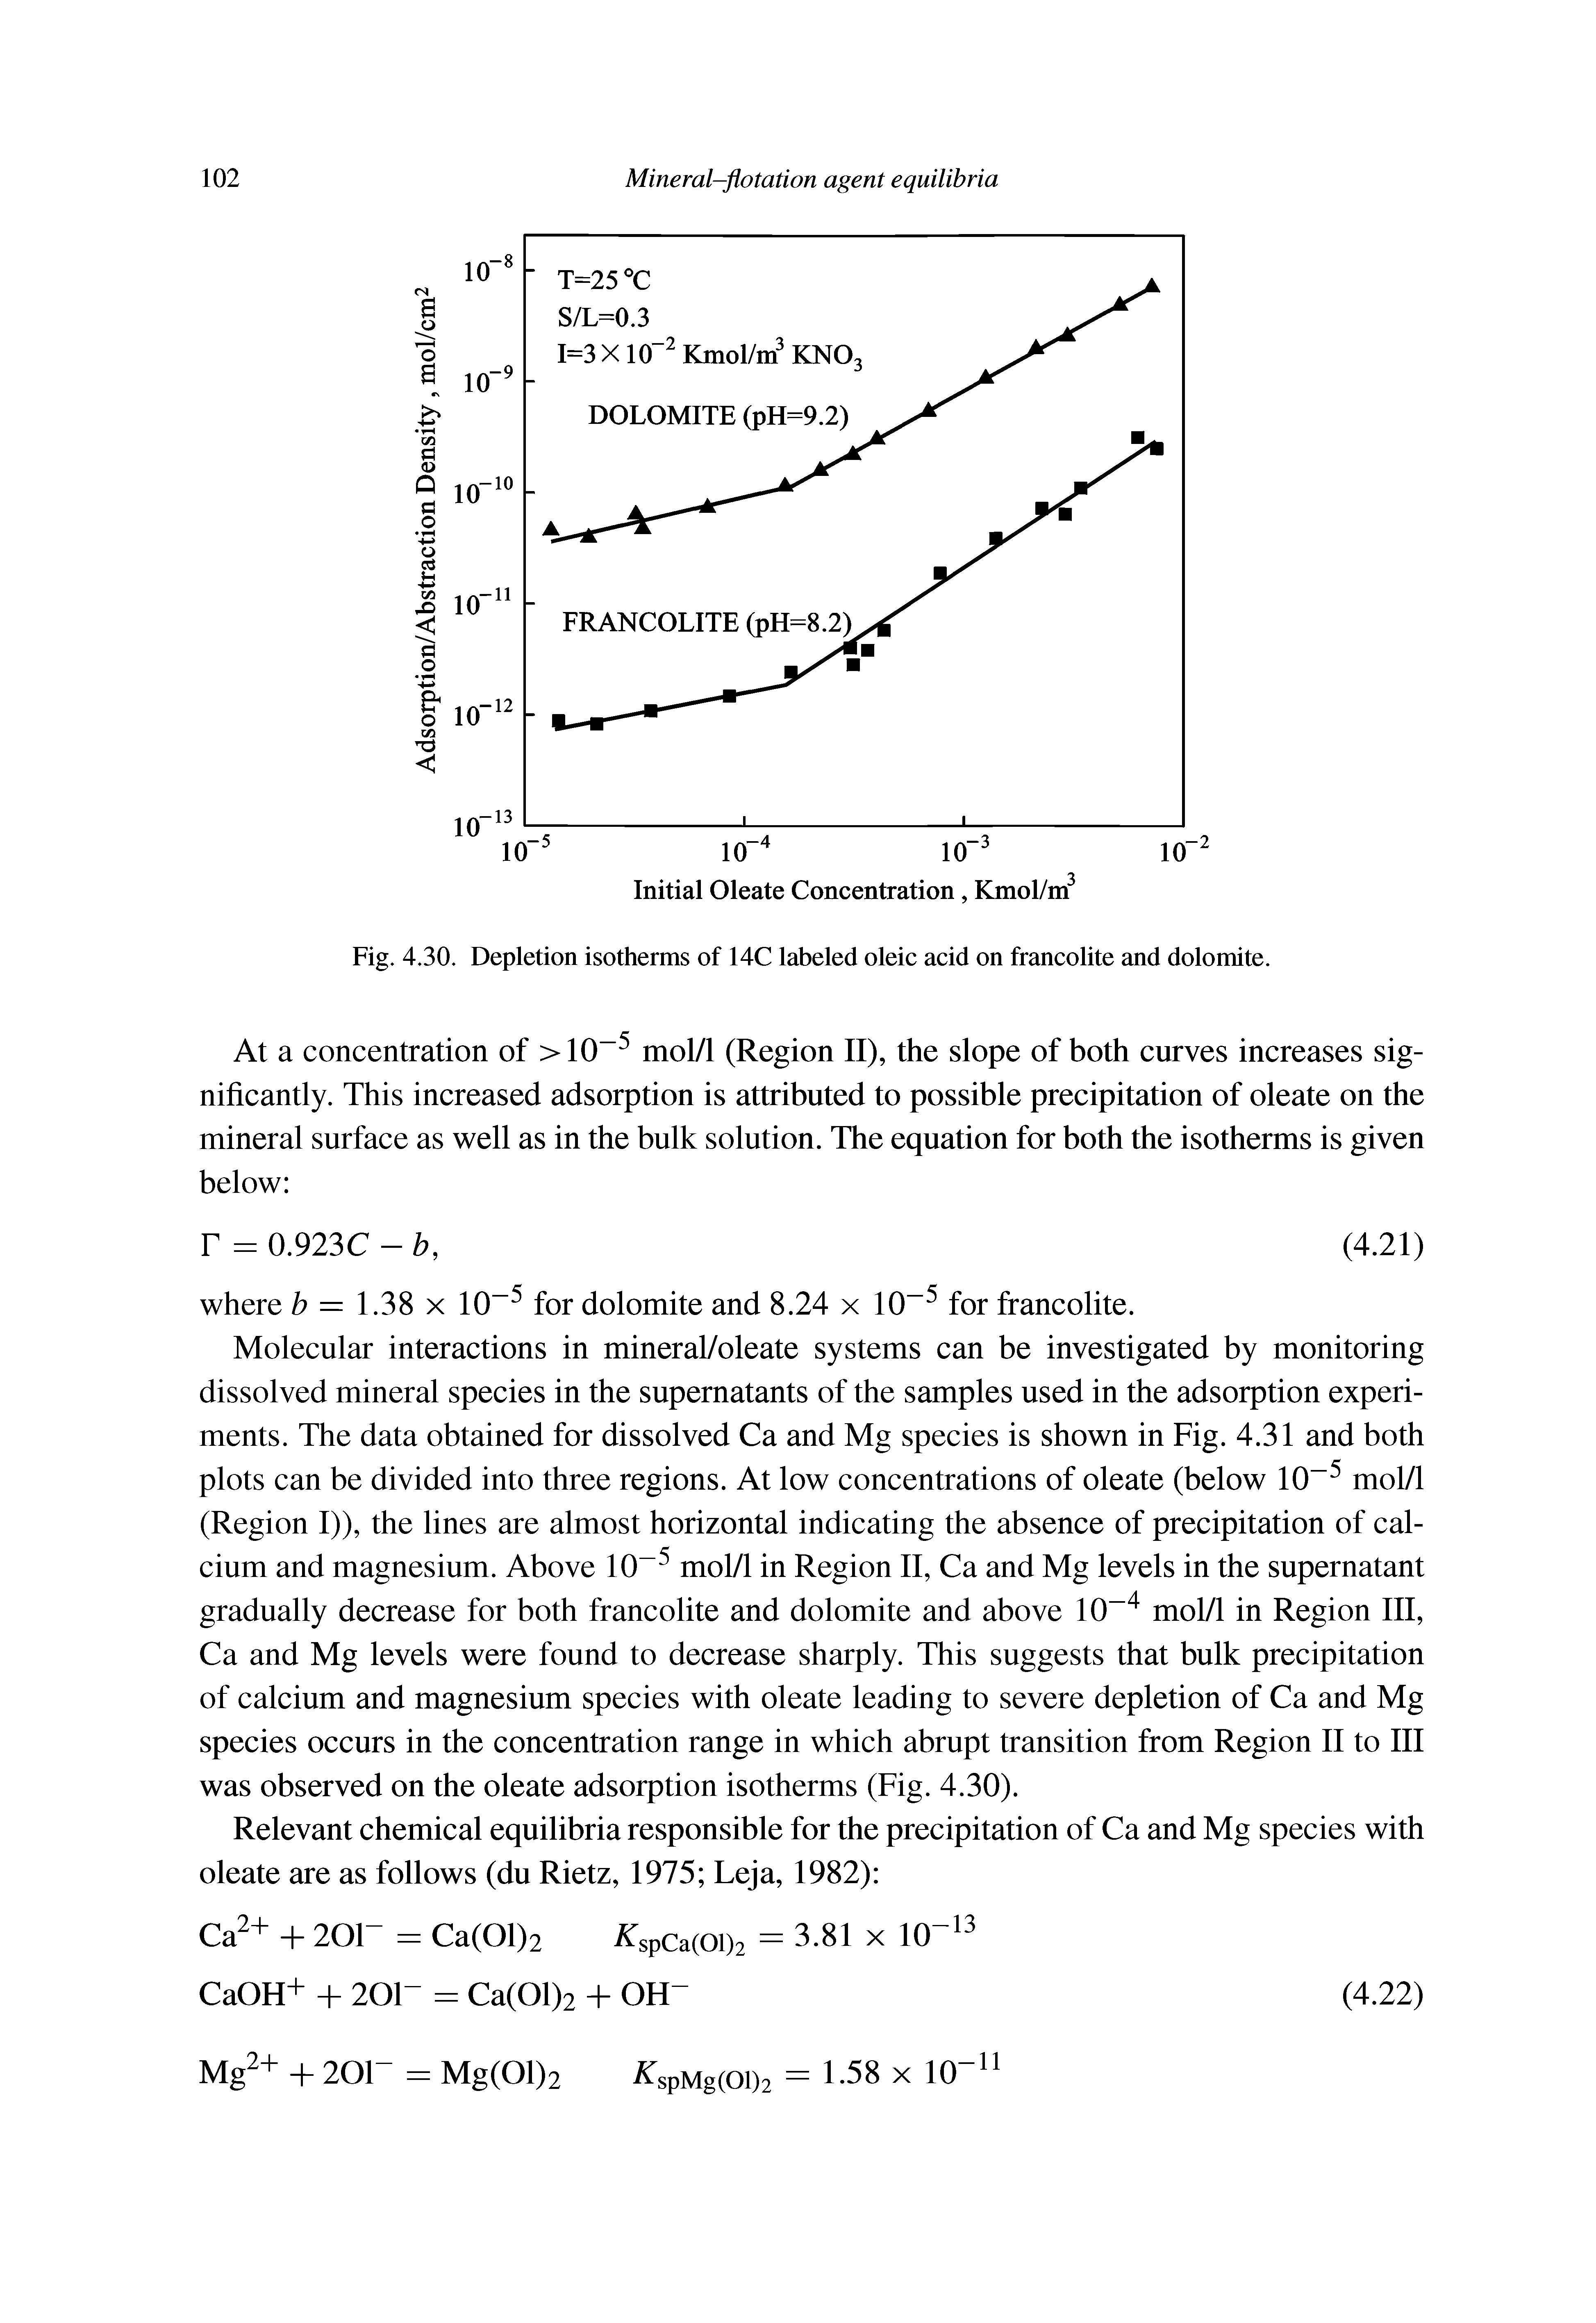 Fig. 4.30. Depletion isotherms of 14C labeled oleic acid on francolite and dolomite.